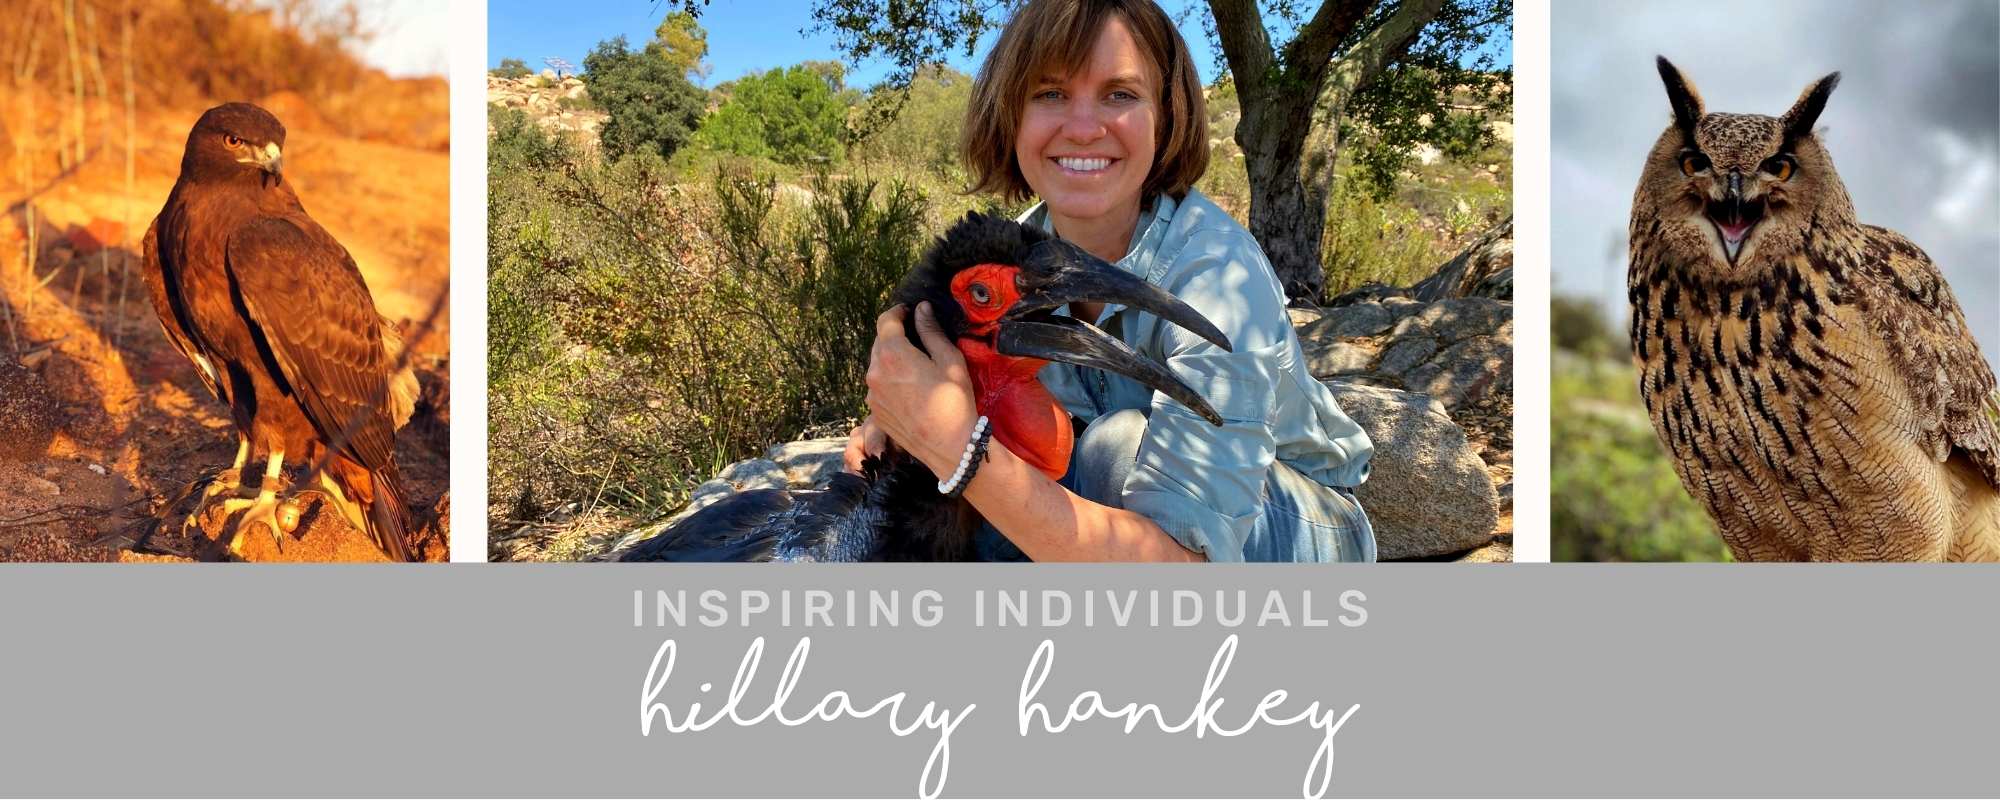 INSPIRING INDIVIDUAL: Hillary Hankey